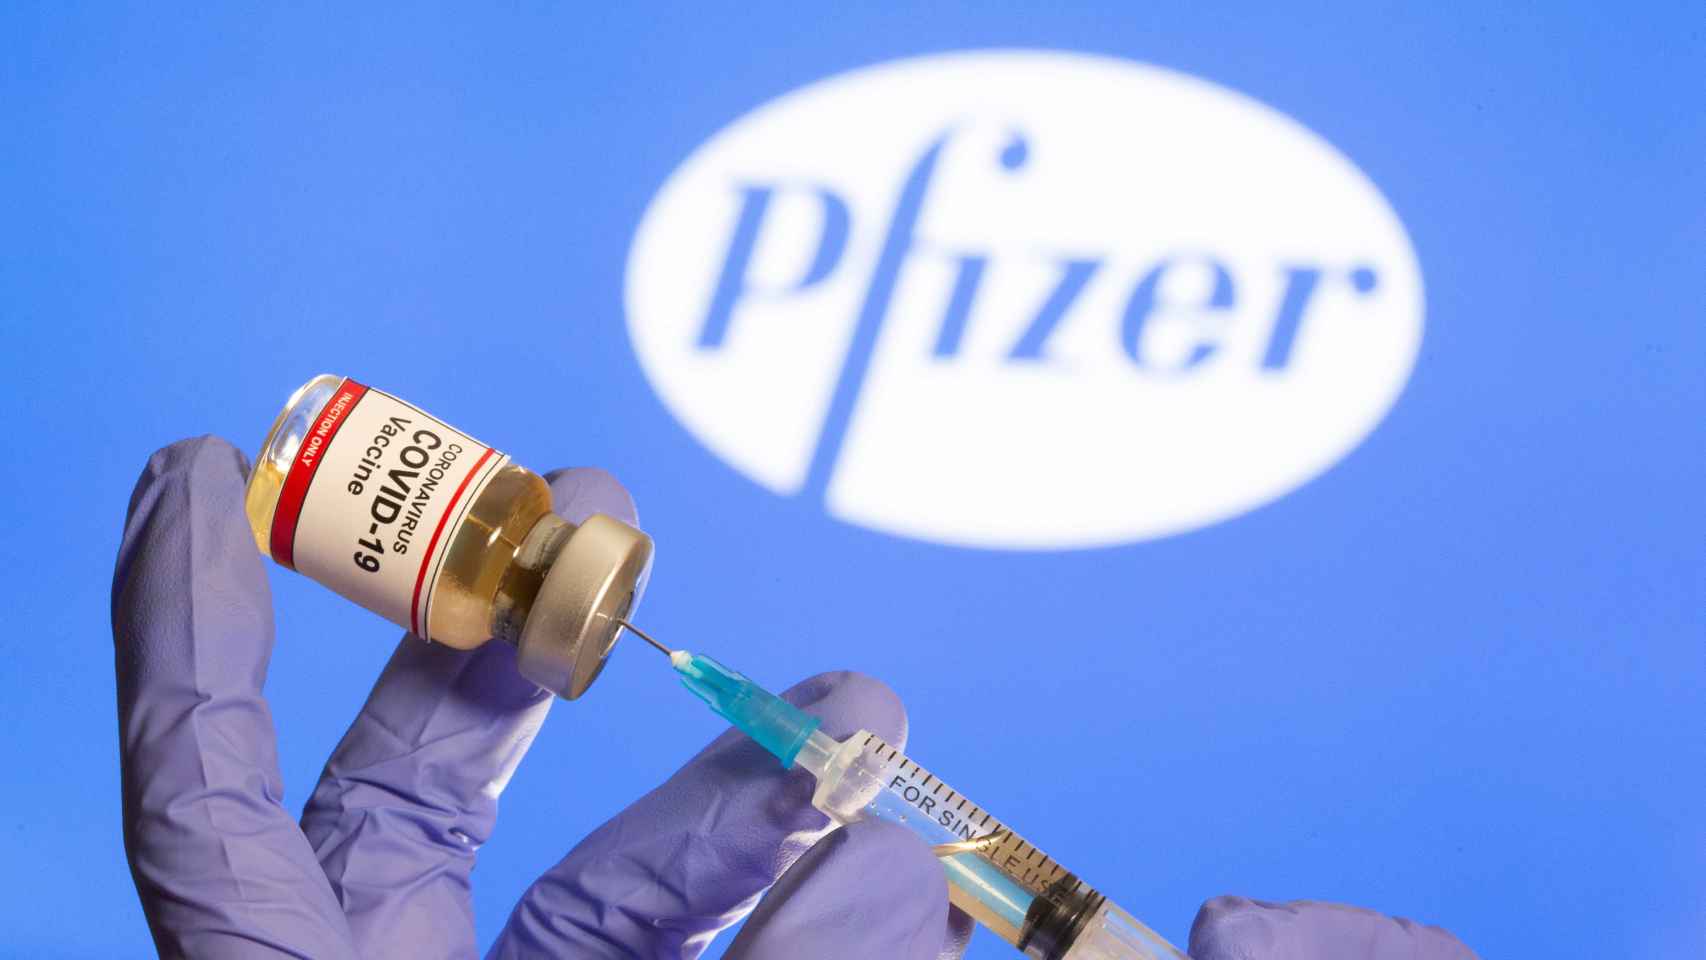 La vacuna de Pfizer.